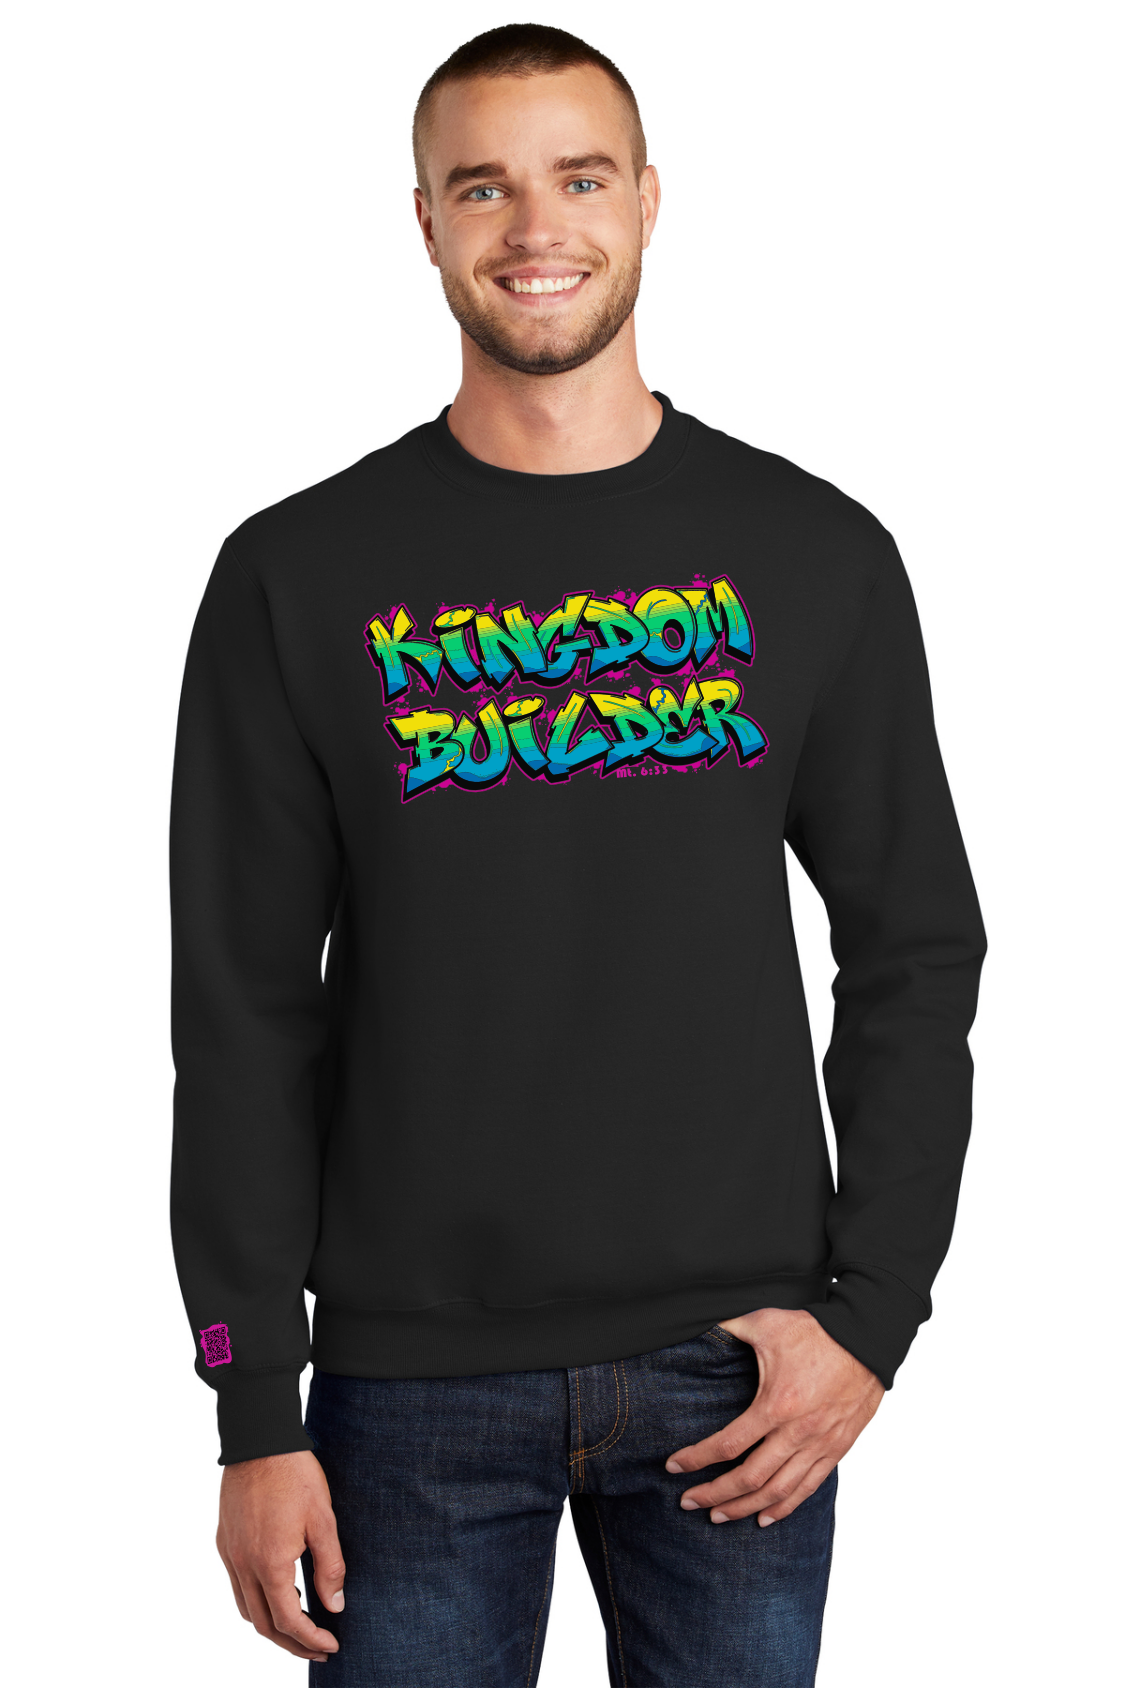 Kingdom Builder - Black Sweatshirt - Colored Graphics